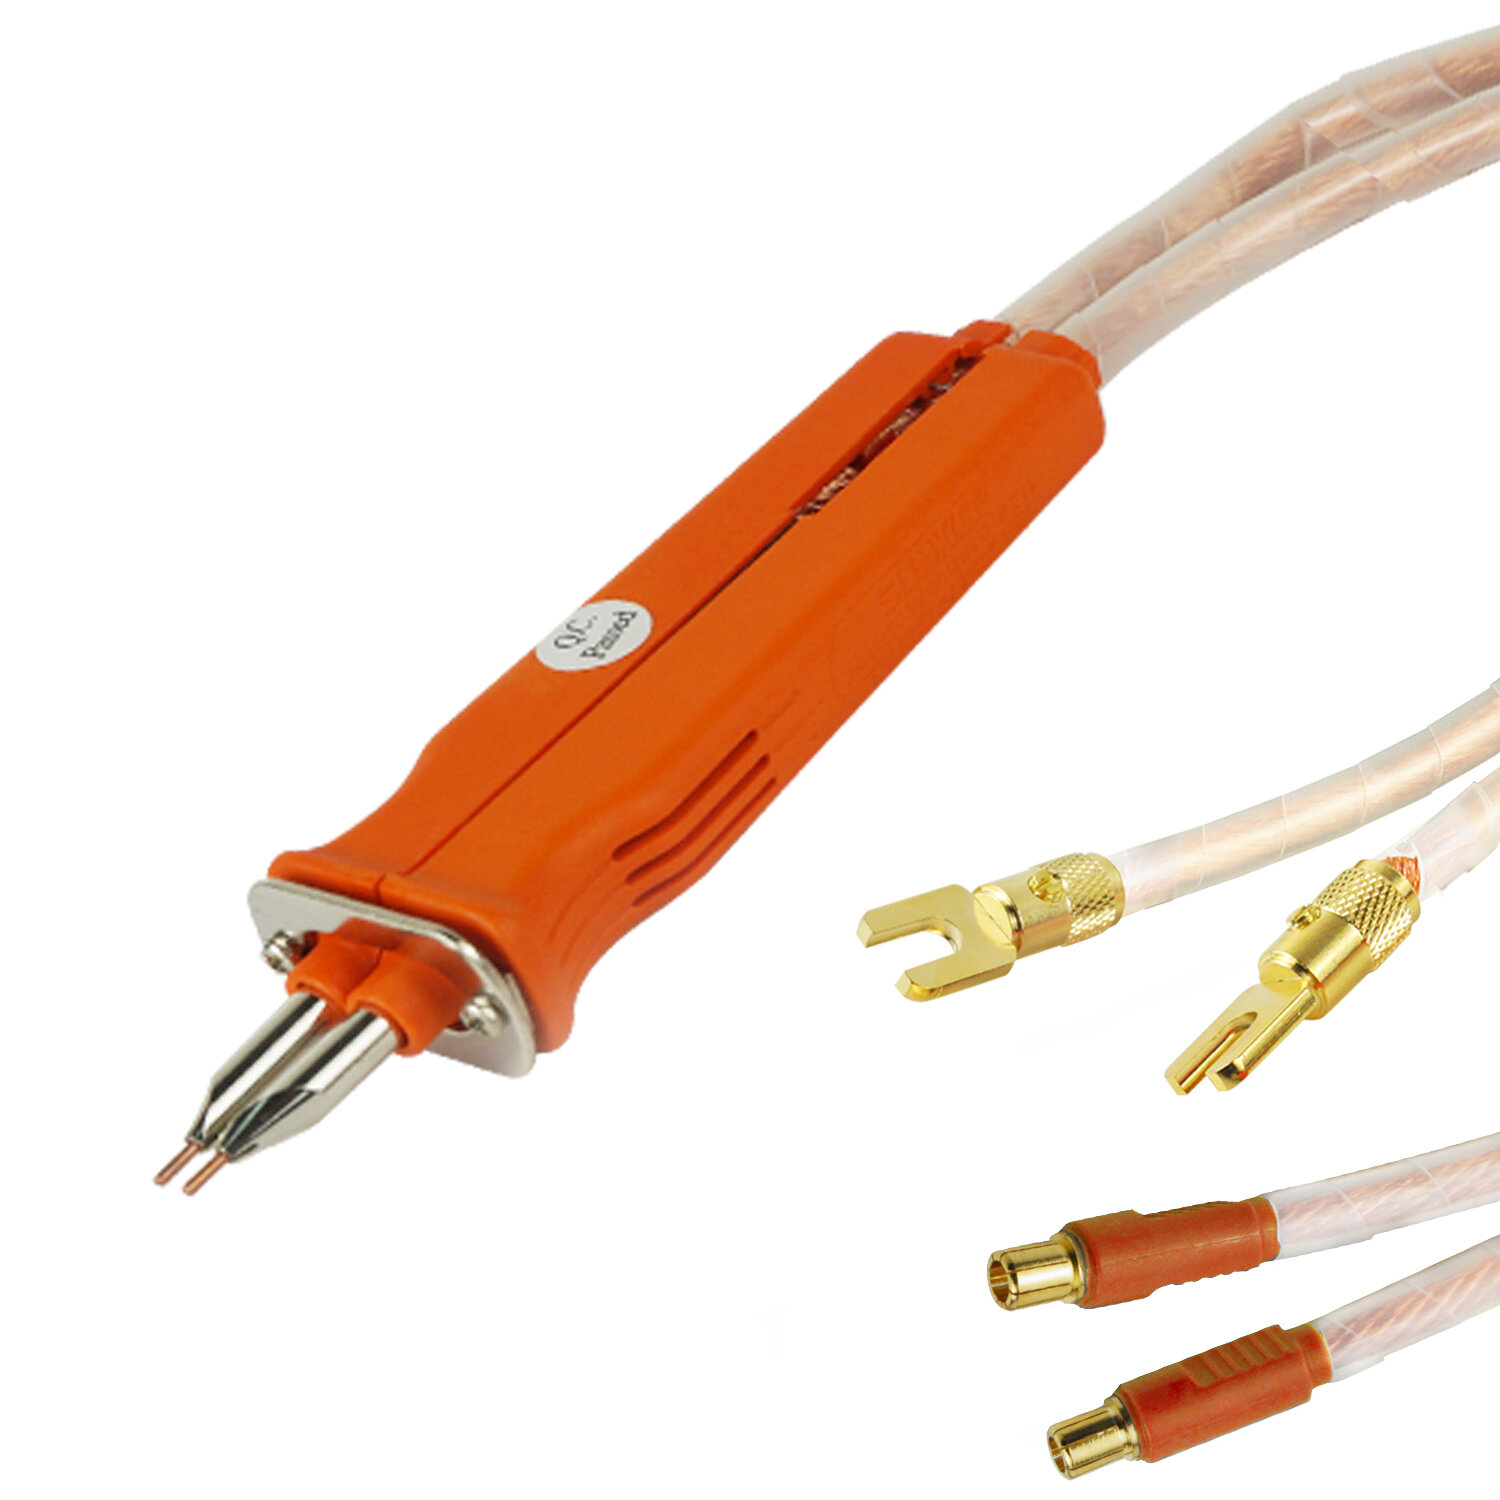 

SUNKKO S-70BN Handheld Mobile Spot Welder Pen with Adjustable Welding Pins High-Efficiency Design Enhanced Cable Connect